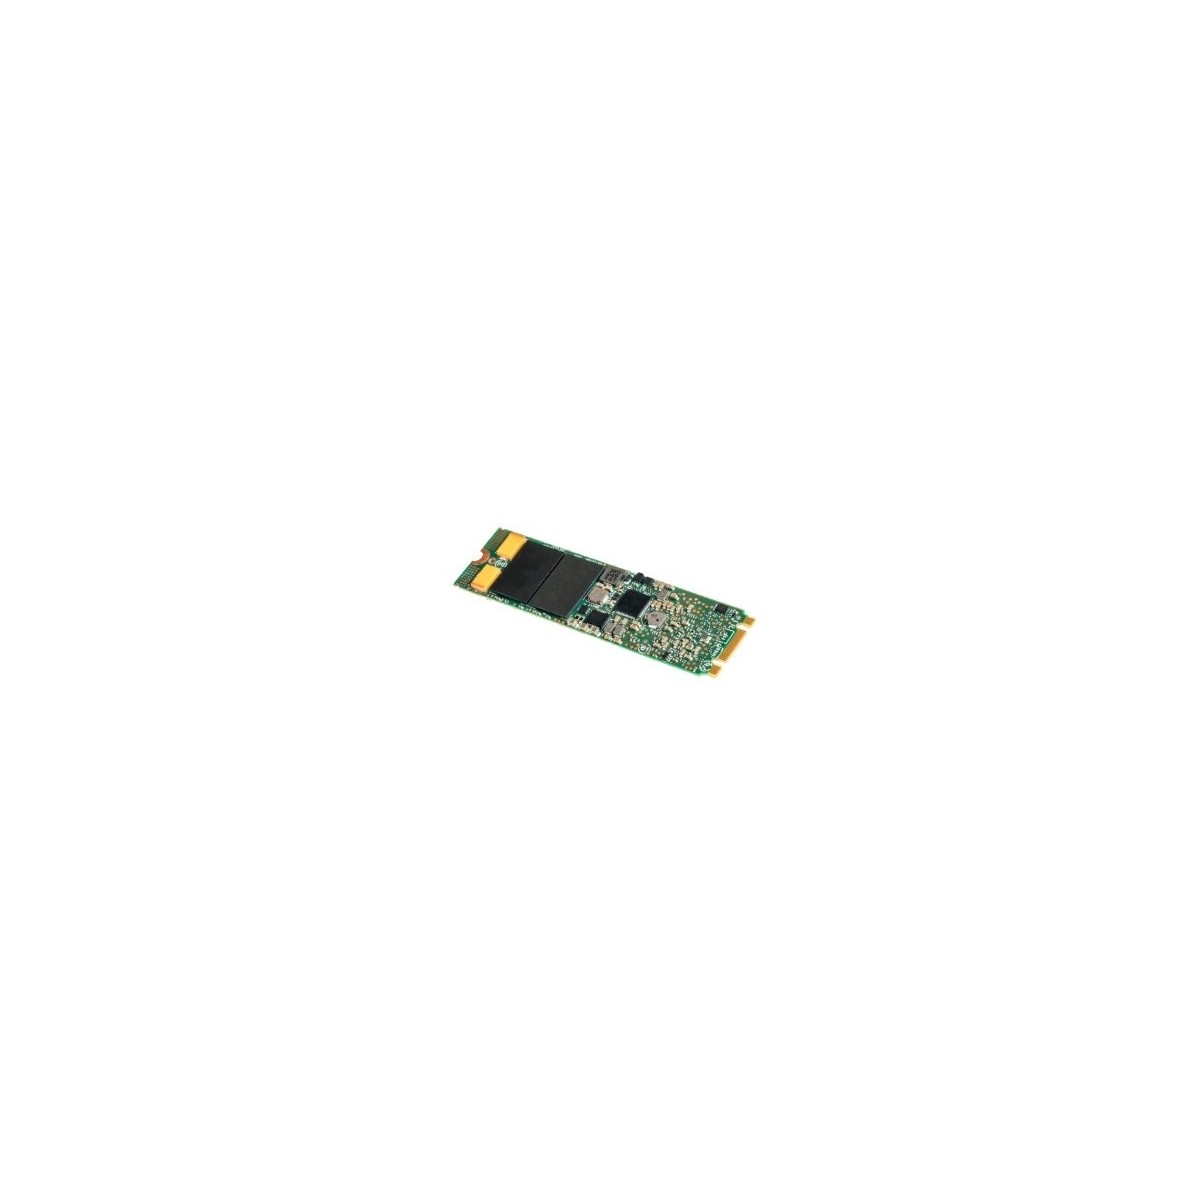 Intel SSD DC S3520 Series (960GB, M.2 80mm SATA 6Gb/s, 3D1, MLC) Generic Single Pack